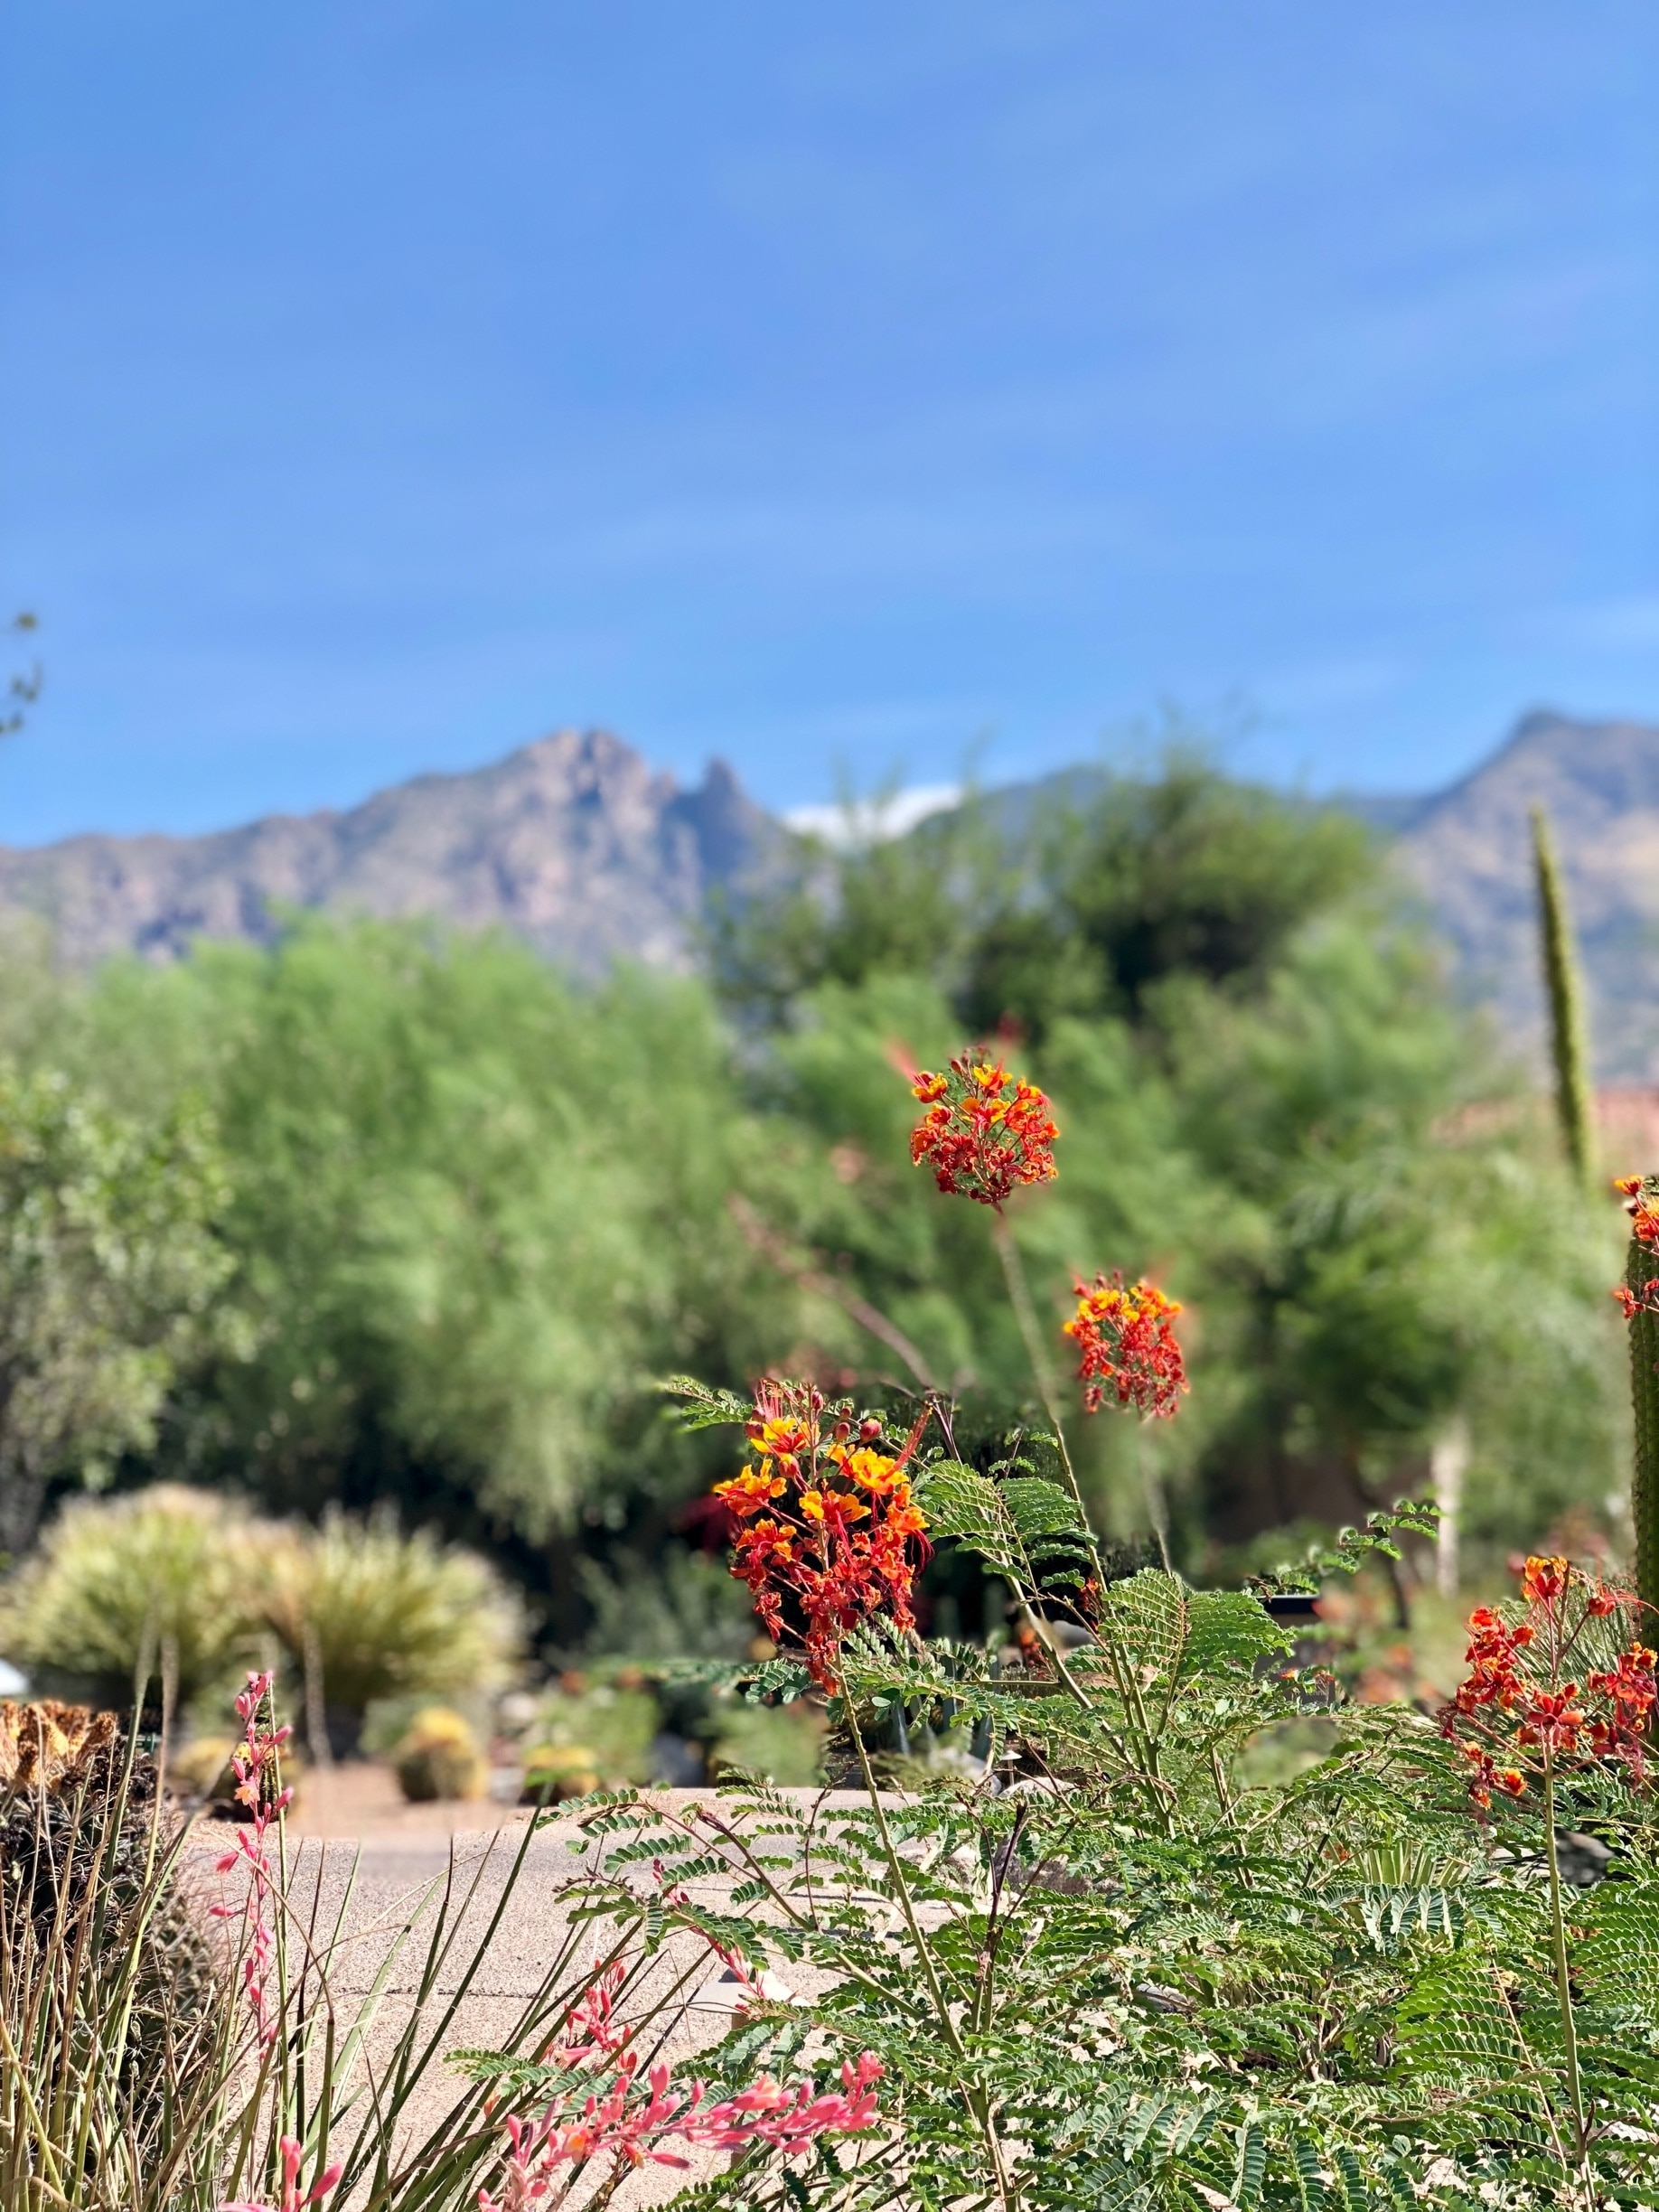 Tucson, Arizona.   Desert in bloom!